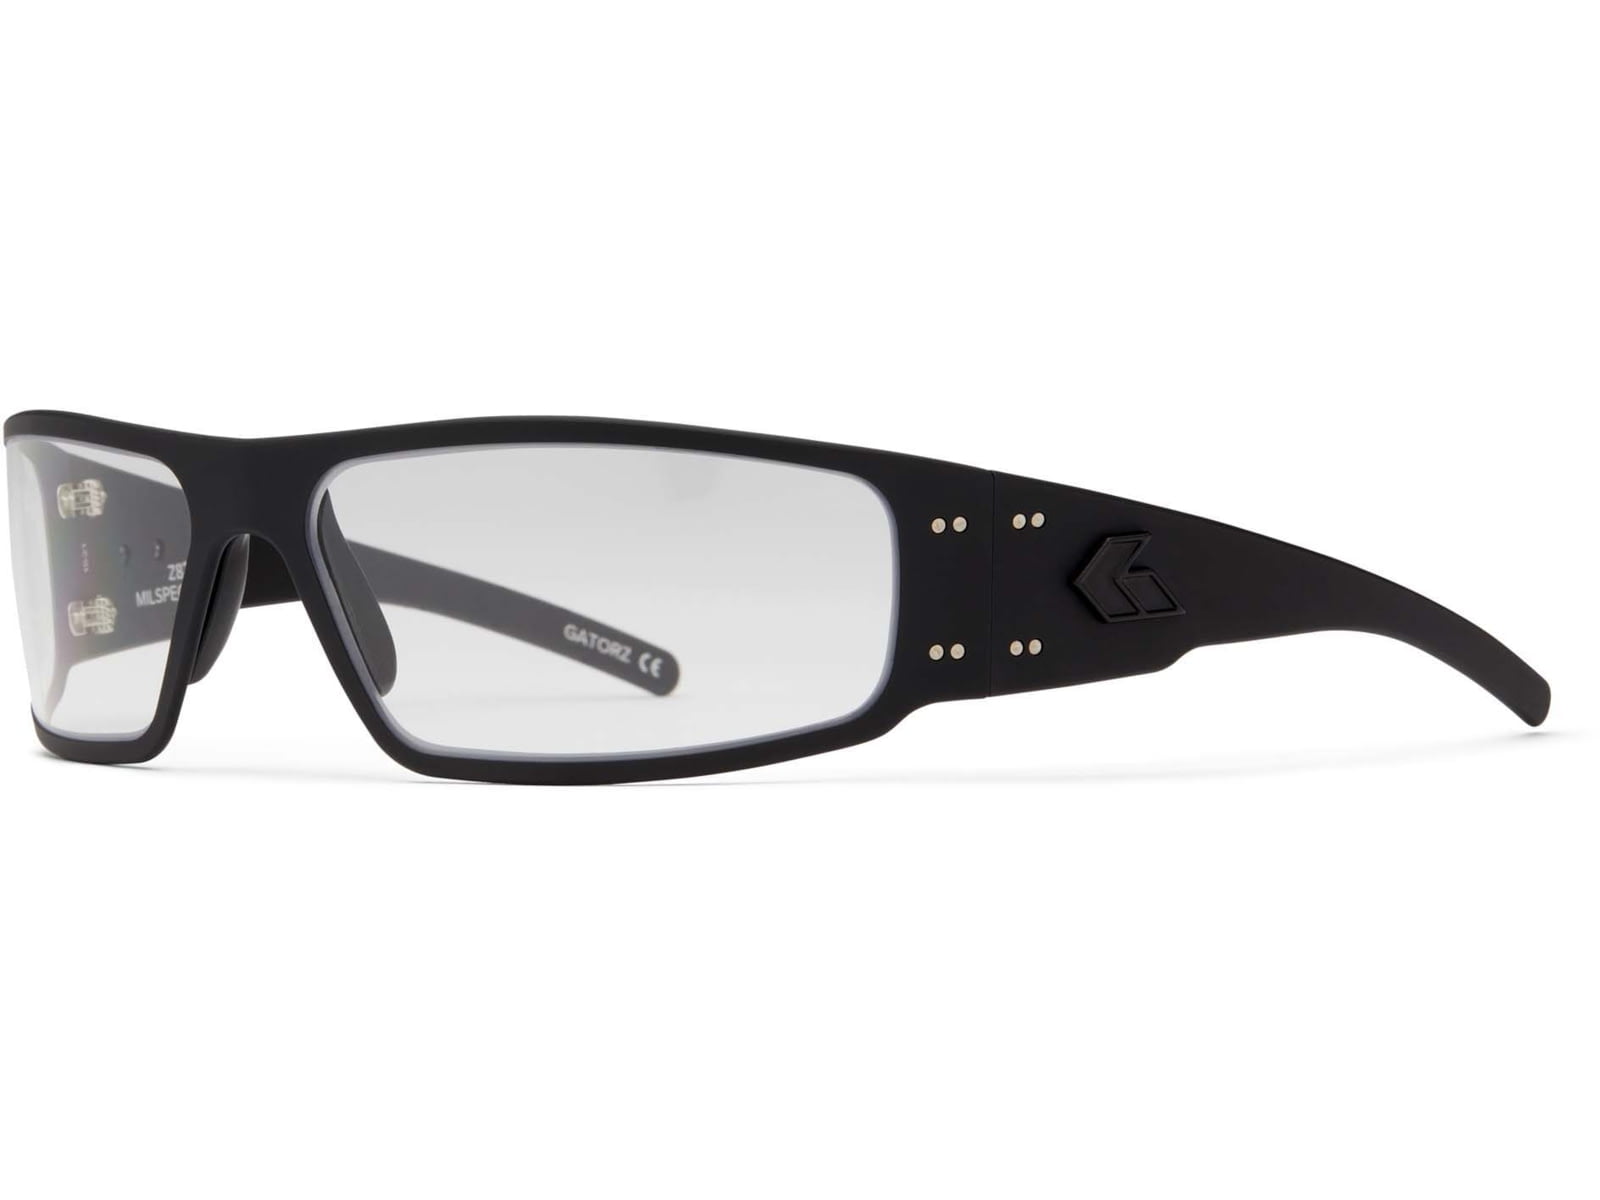 Gatorz Magnum Sunglasses, Milspec Ballistic, Z87.1 Black Frame, Clear Anti  Fog L 